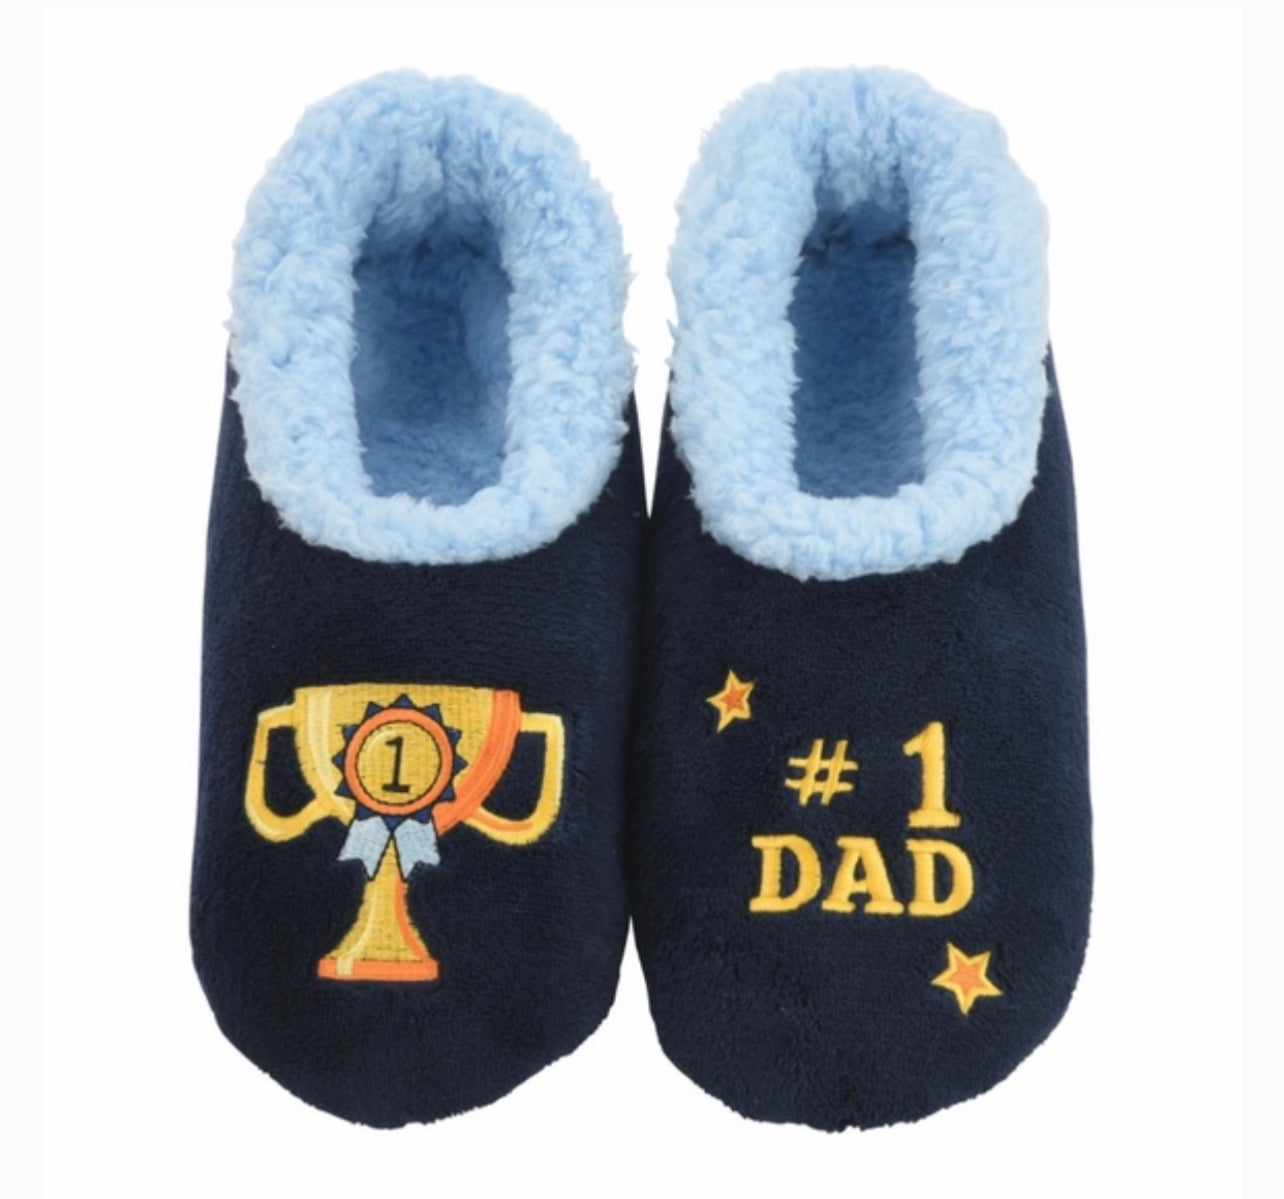 Slippers Men’s #1 Dad Snoozies trophy best